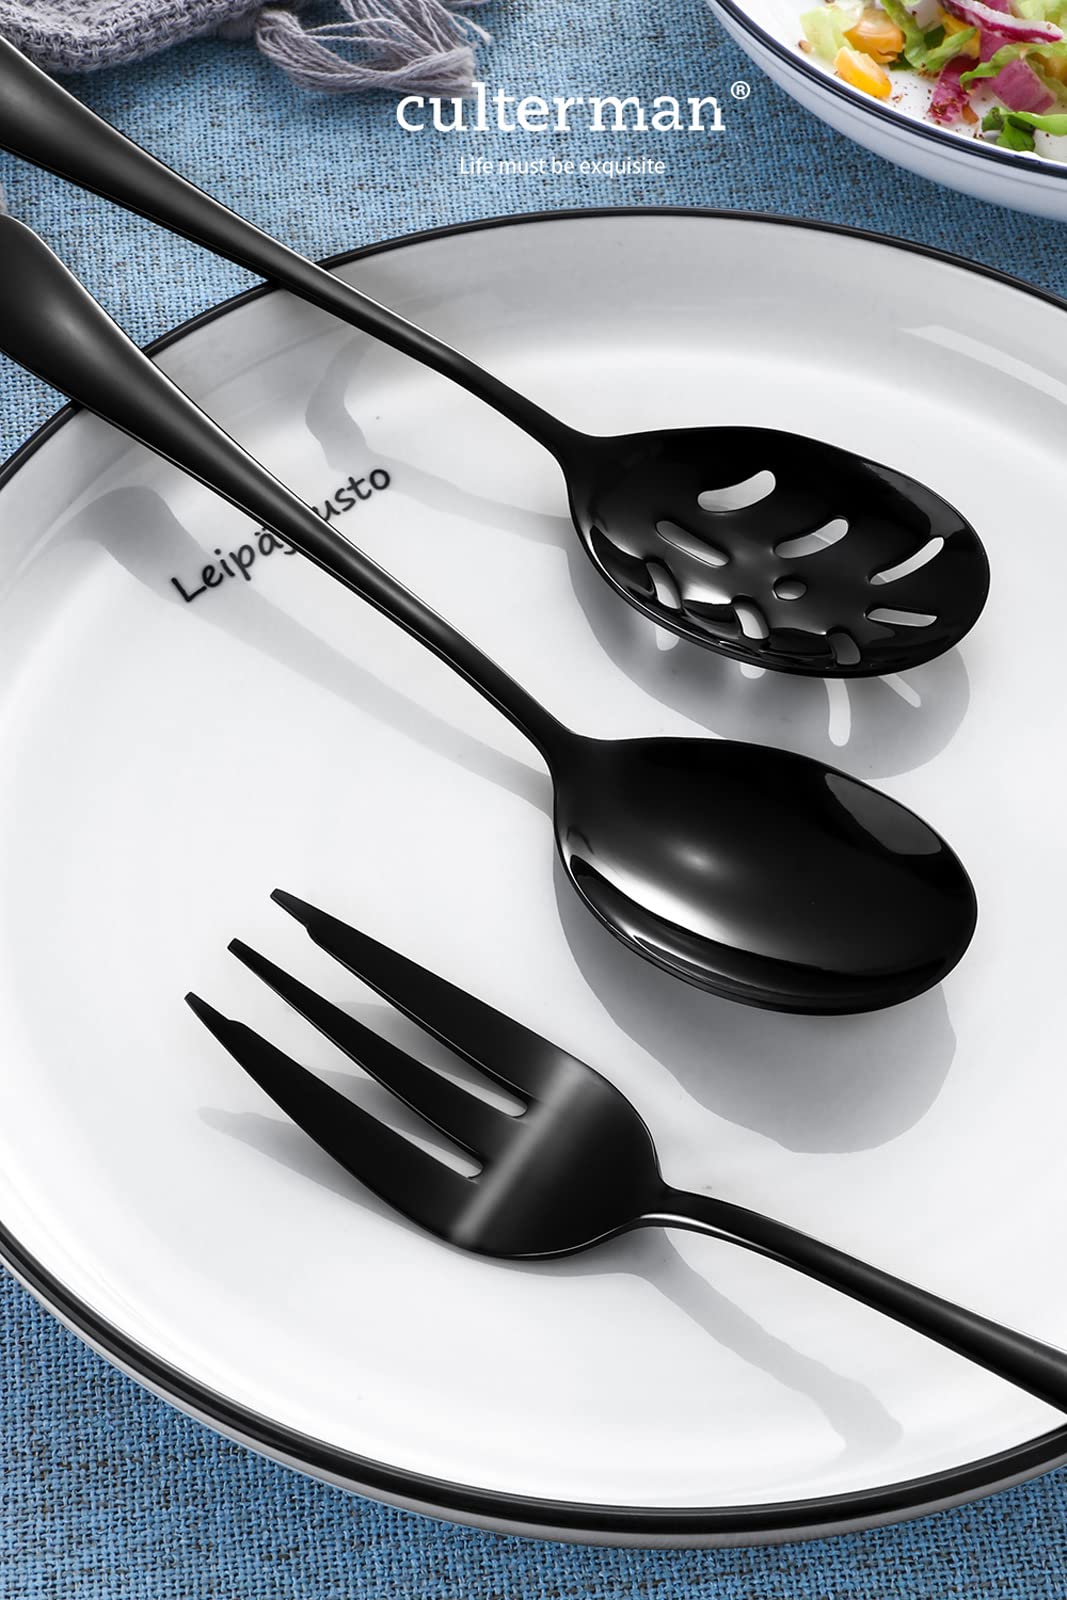 Black Serving utensils set. Stainless Steel Hostess Flatware Sets 7-Piece Includes Silverware Large Salad Serving Spoons, Forks & Slotted Spoons,sugar spoons,butter knife.Dishwasher Safe